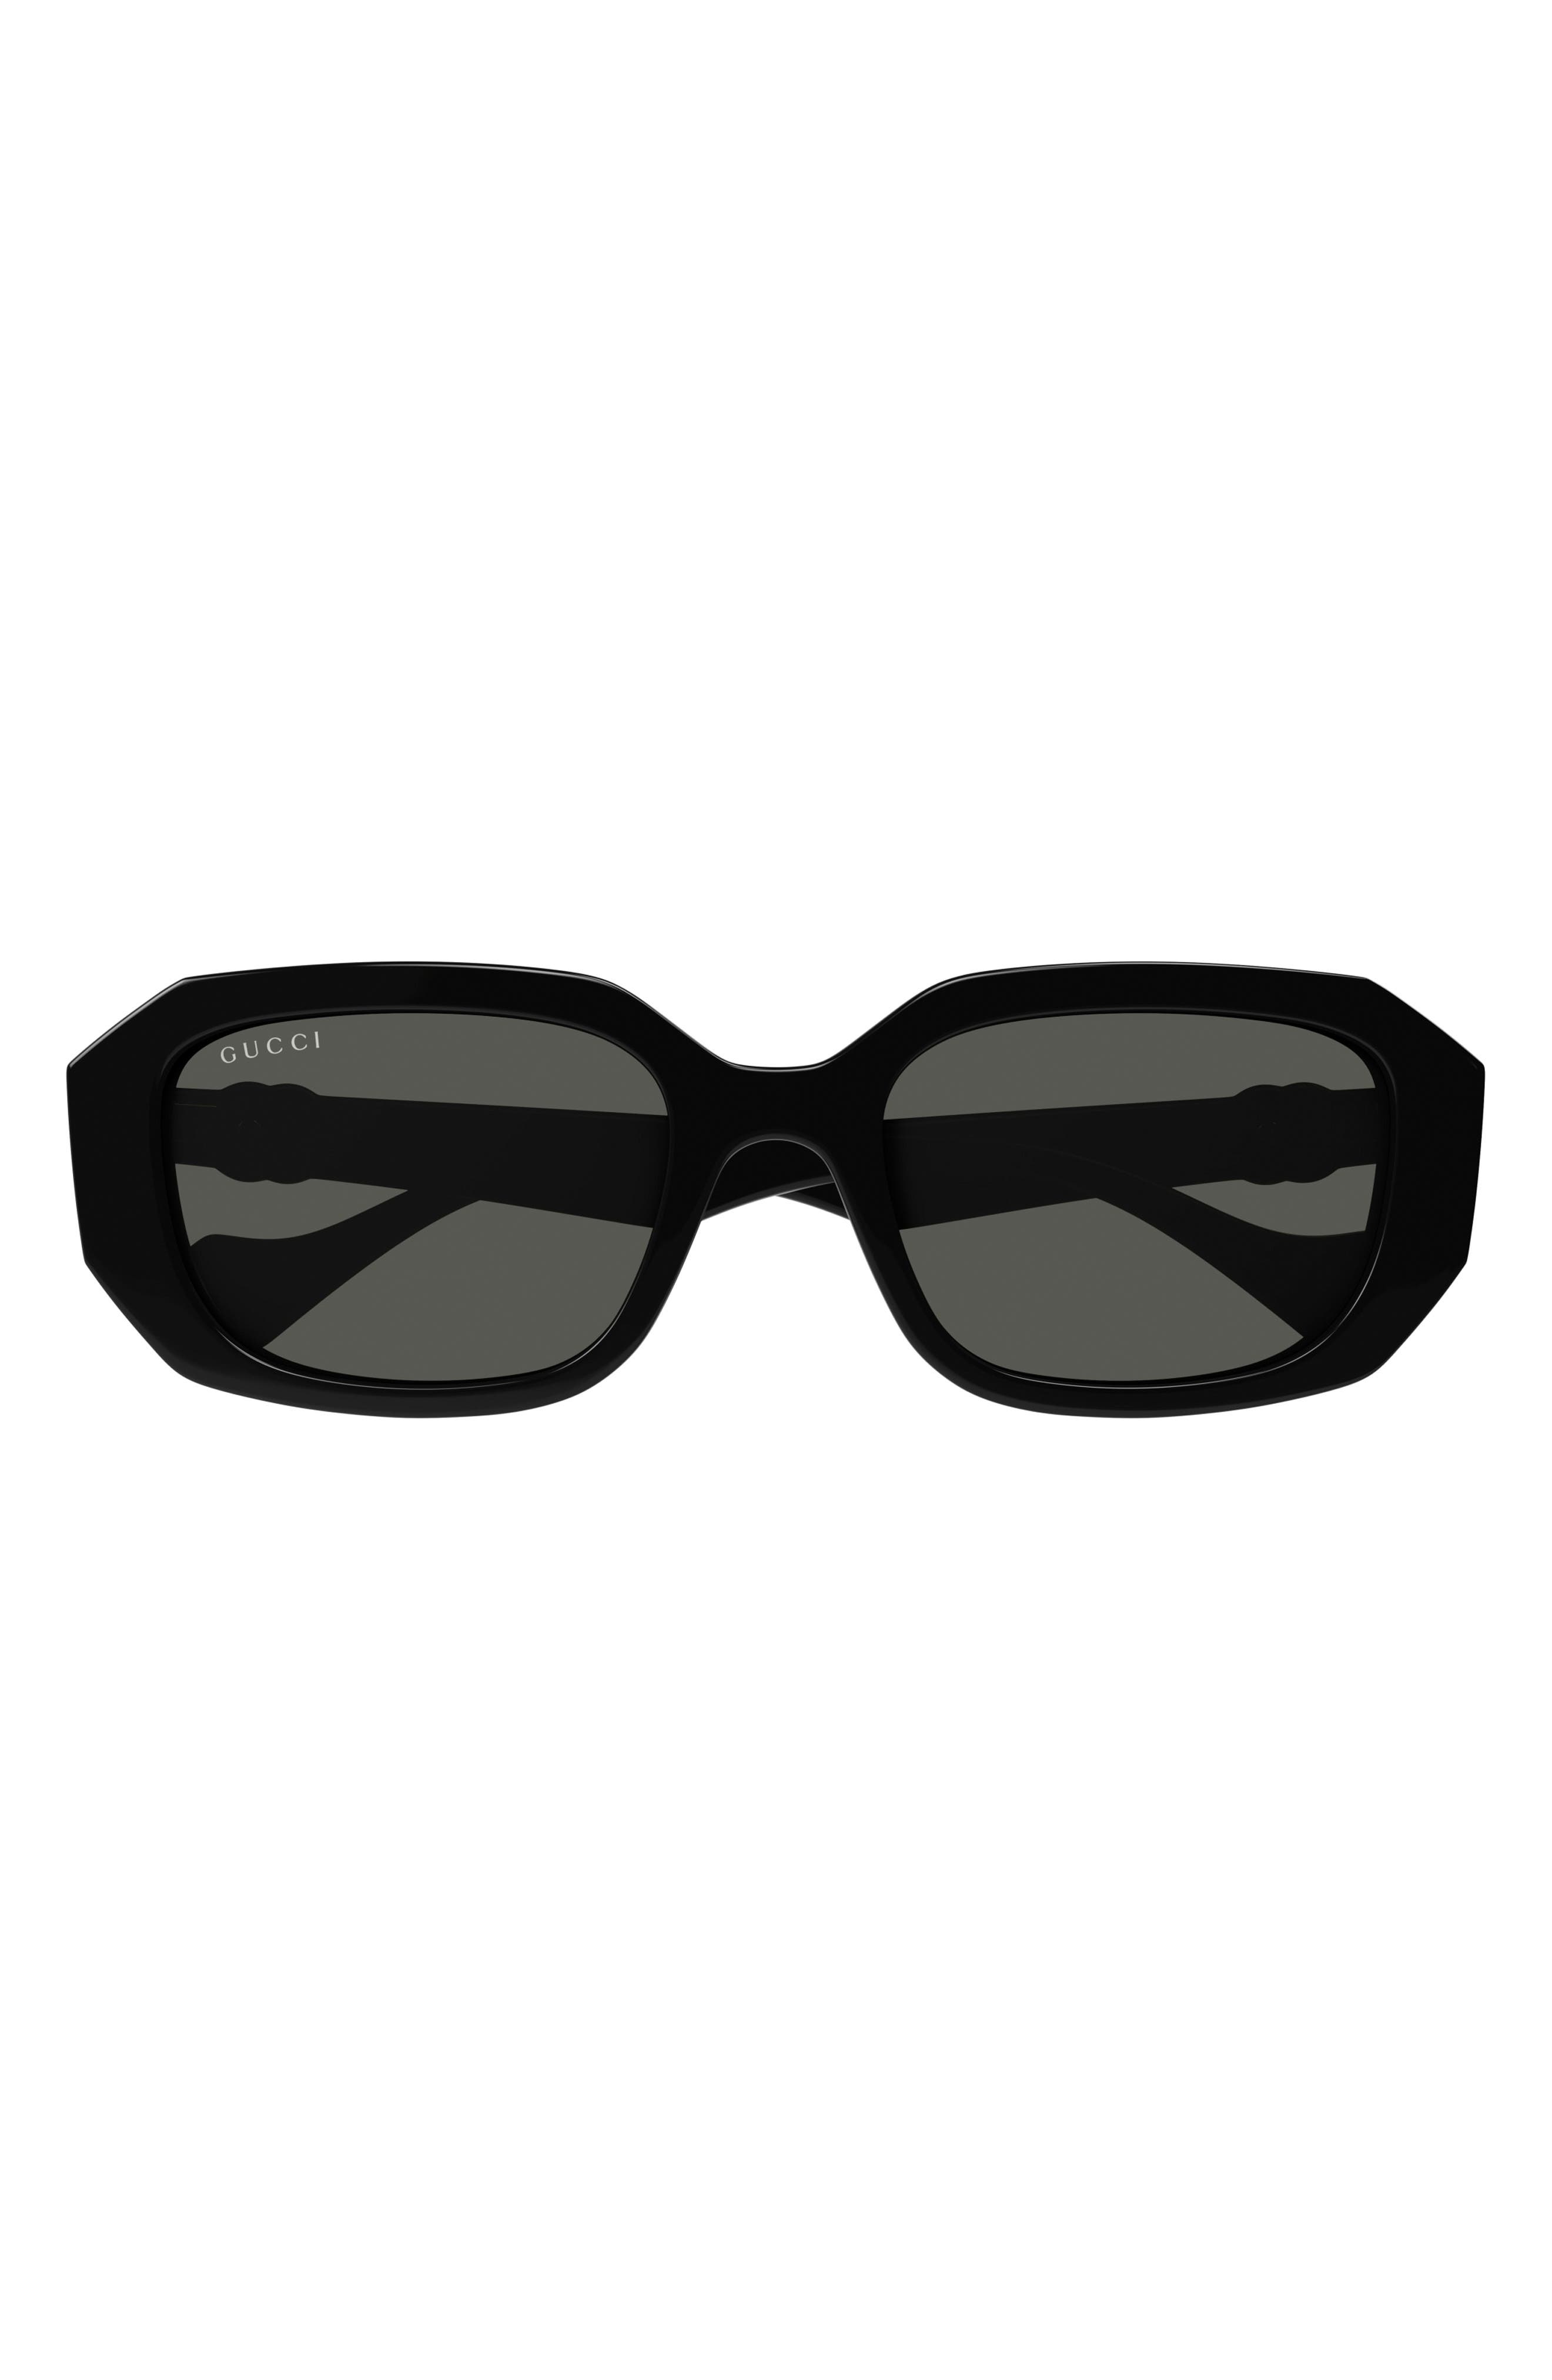 Prada Butterfly Sunglasses Black/Dark Grey (PRA02S)